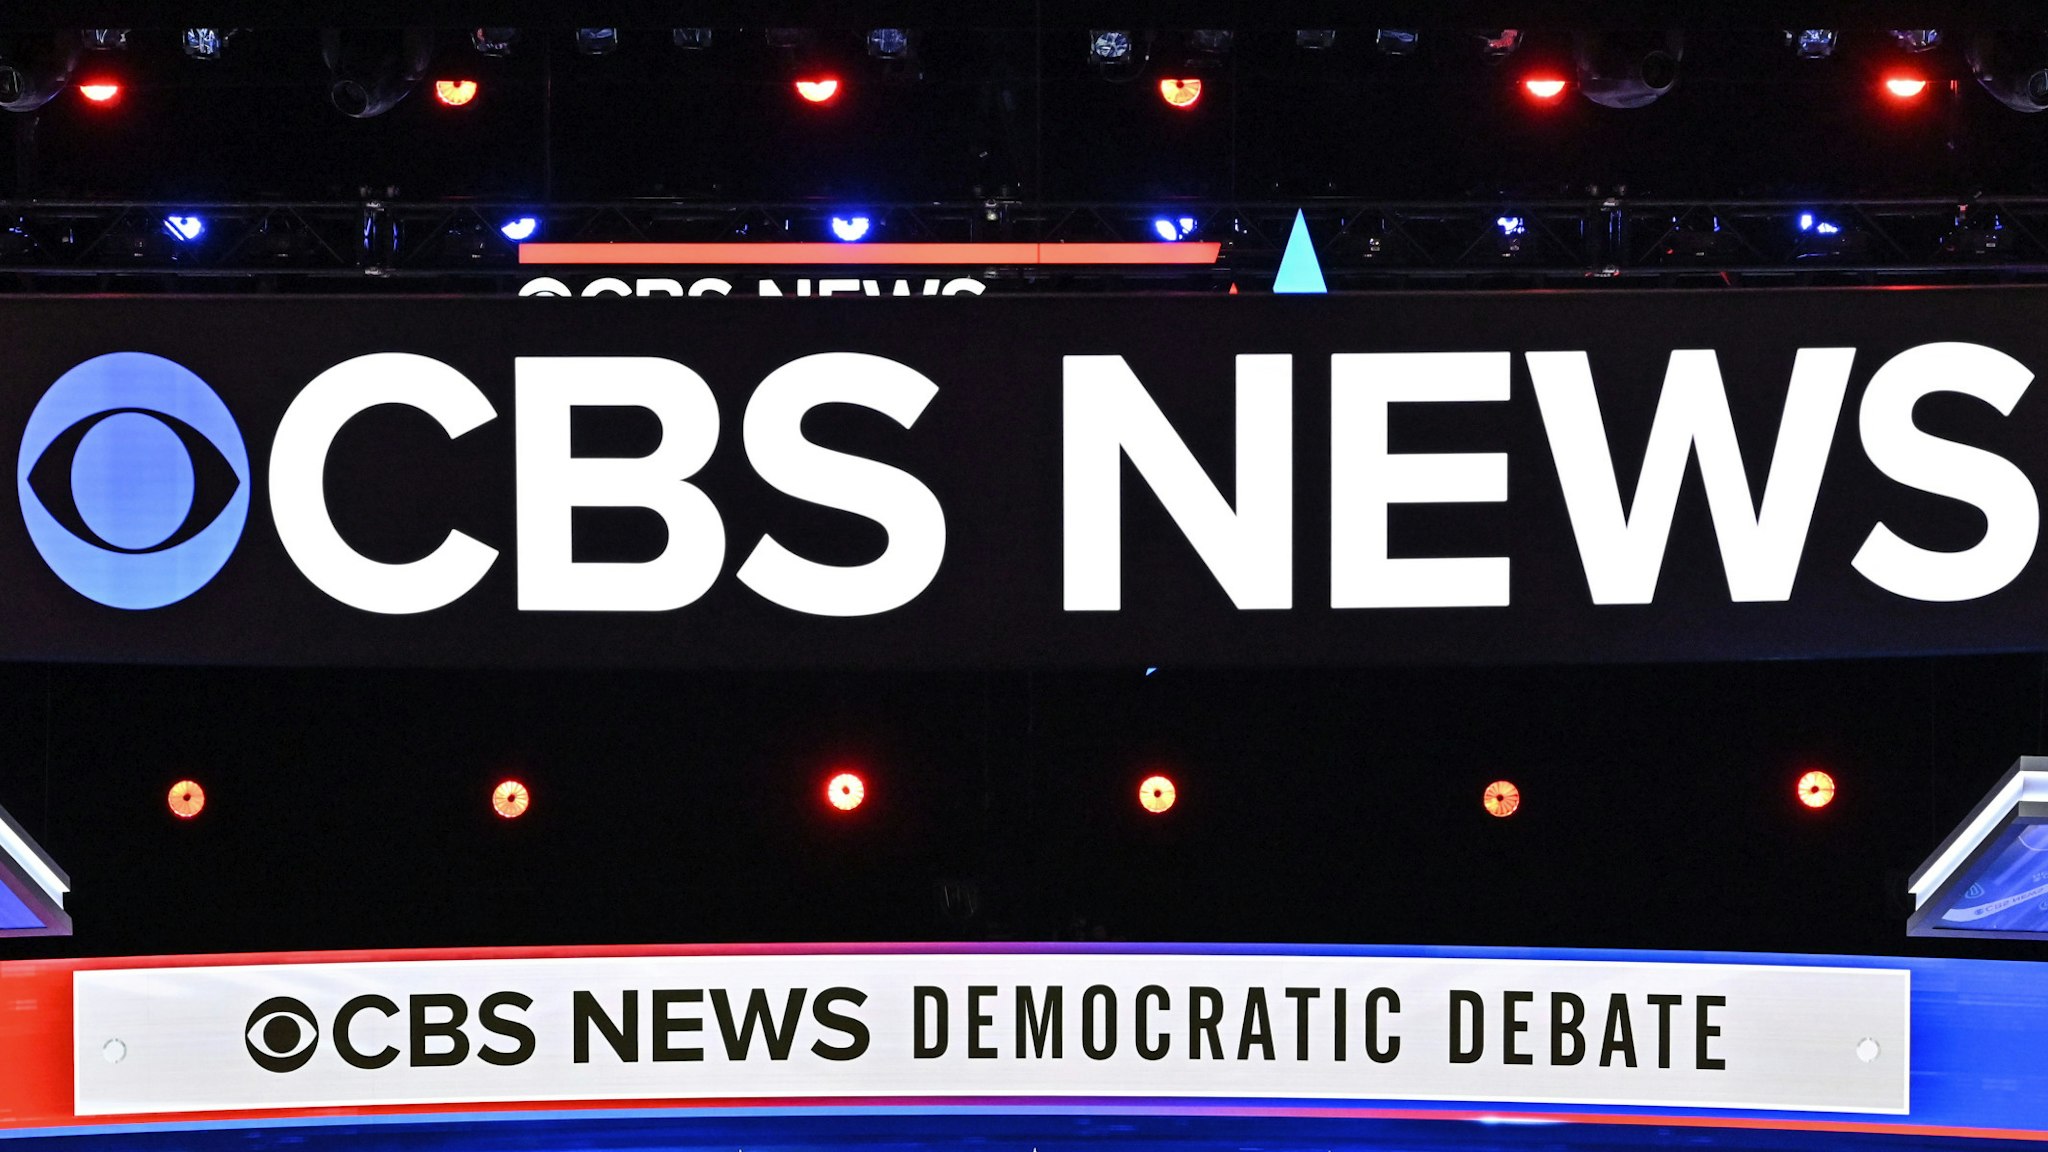 CHARLESTON - FEBRUARY 25: CBS News hosts the 2020 Democratic Debate in Charleston, SC on February 25, 2020.